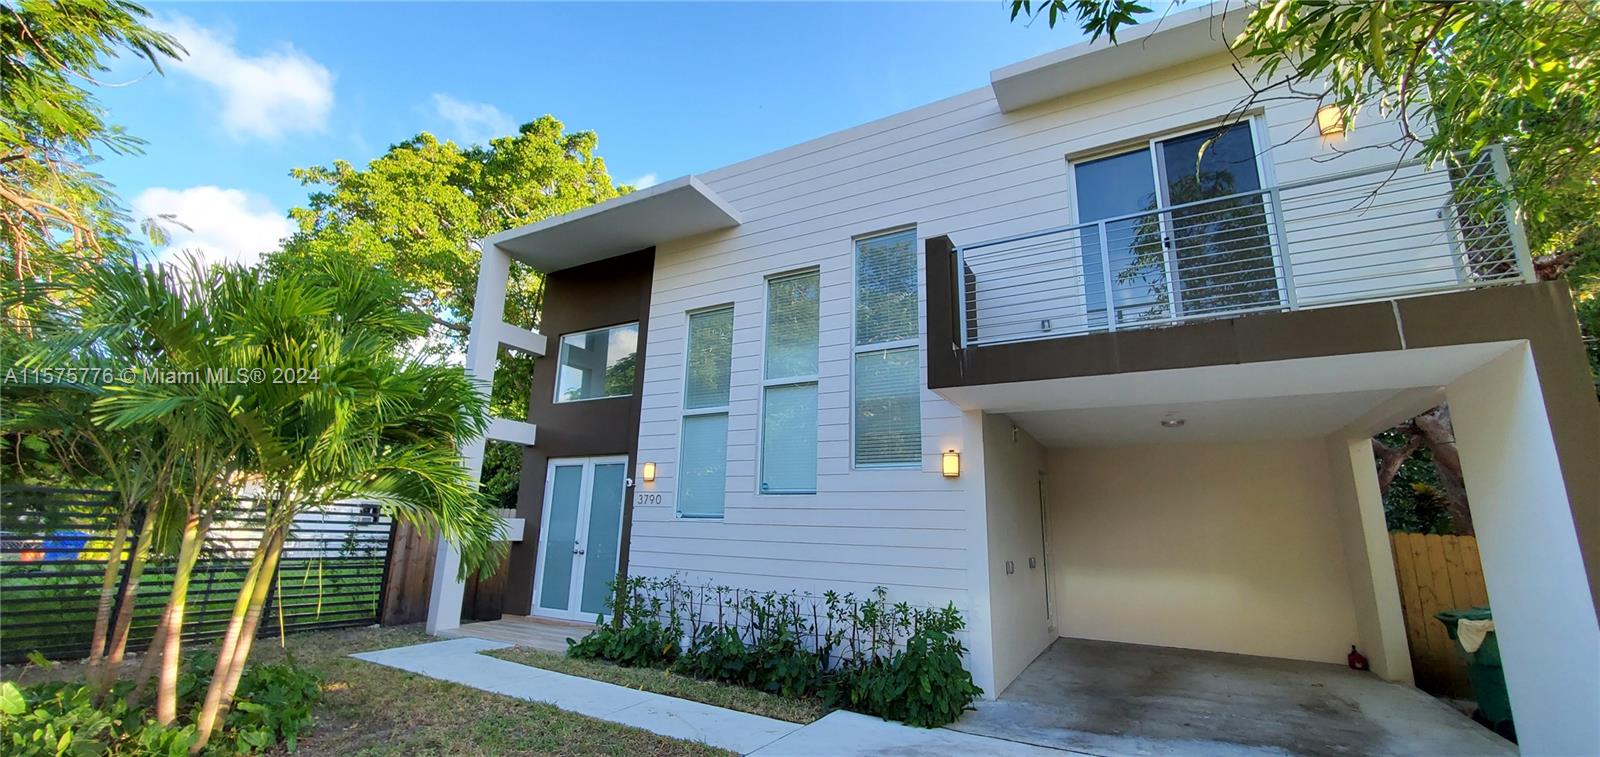 Rental Property at 3790 Oak Ave 3790, Miami, Broward County, Florida - Bedrooms: 3 
Bathrooms: 3  - $6,550 MO.